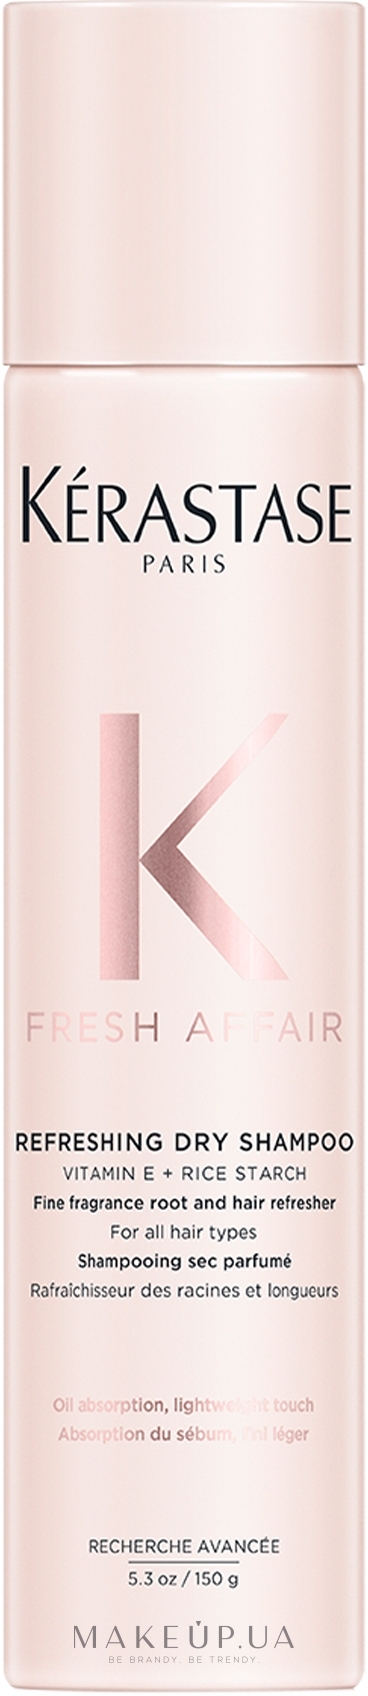 Освіжаючий сухий шампунь для волосся - Kerastase Fresh Affair Dry Shampoo — фото 150g